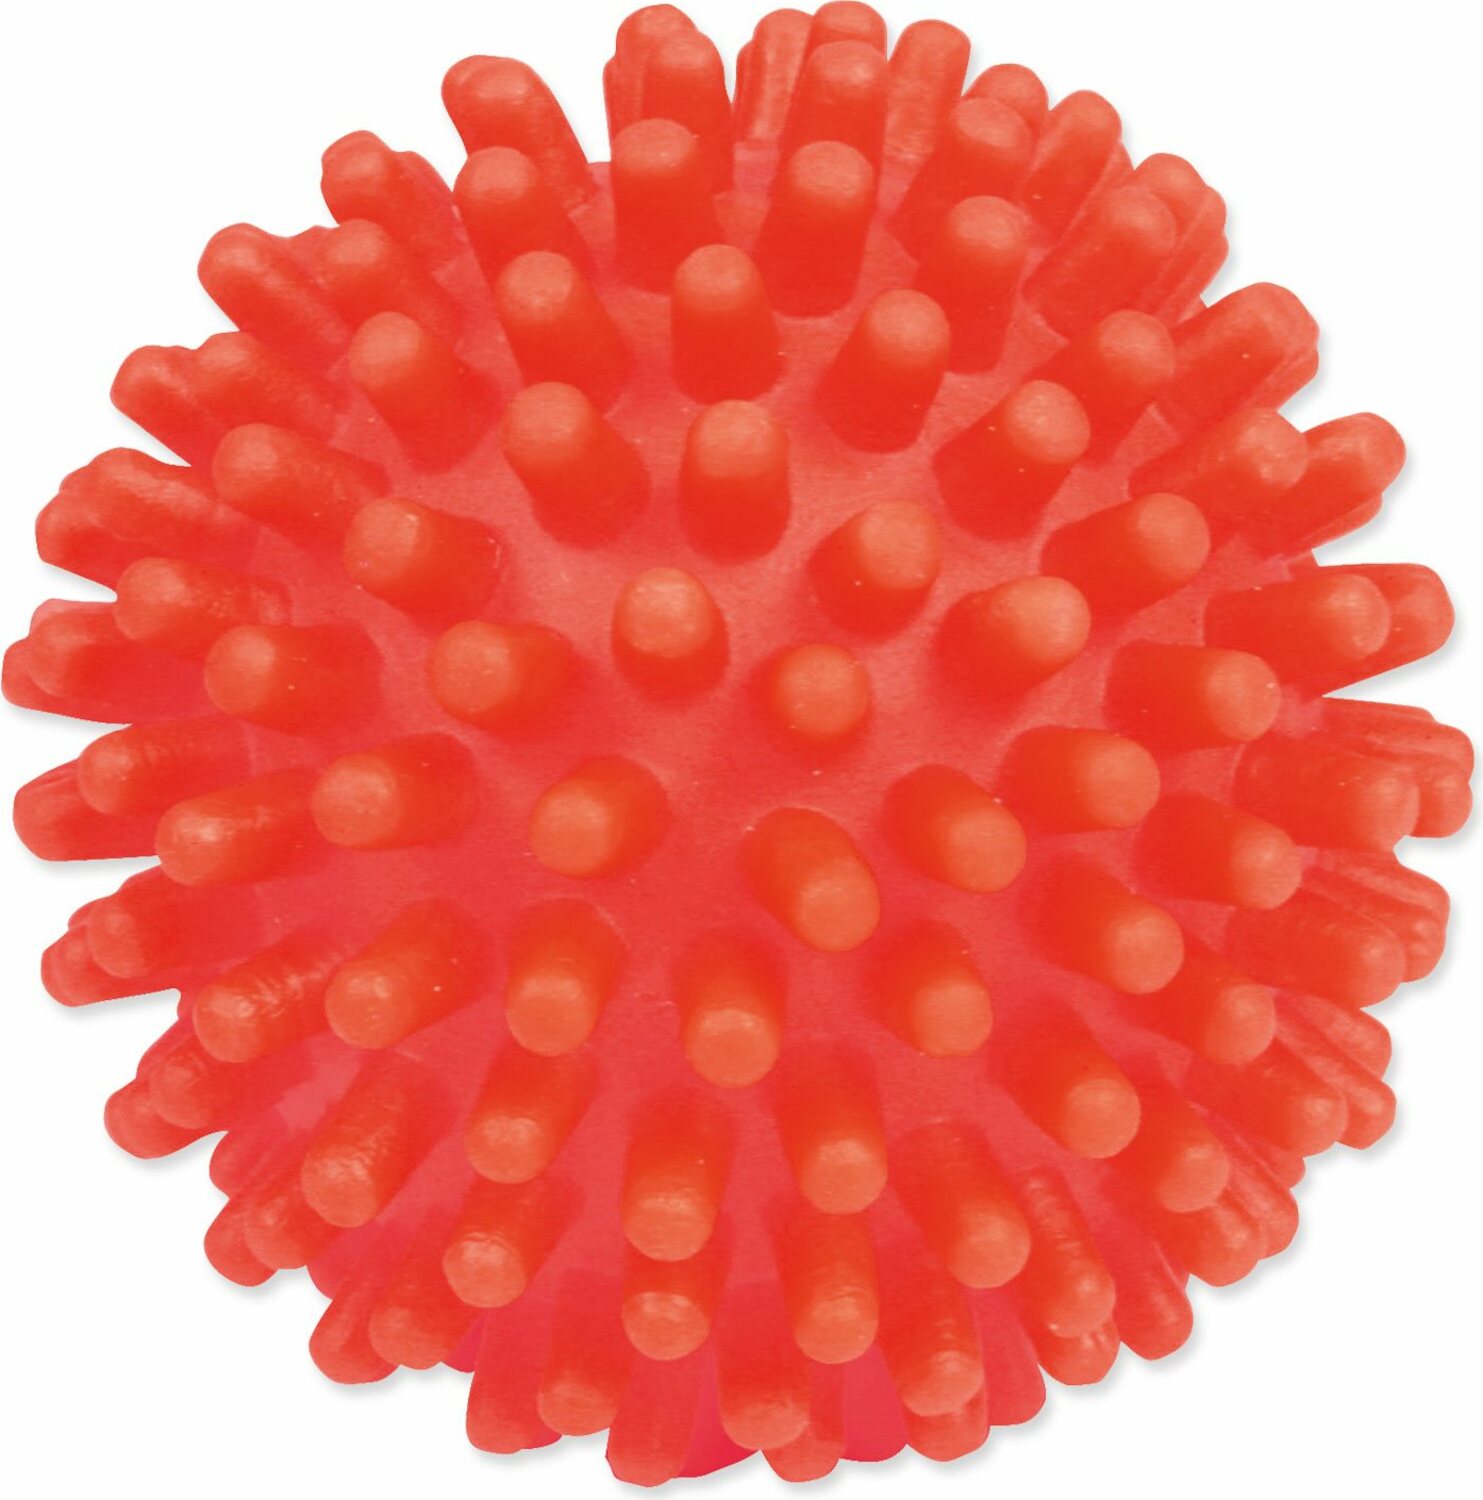 Hračka Trixie míč ježek vinyl 7cm